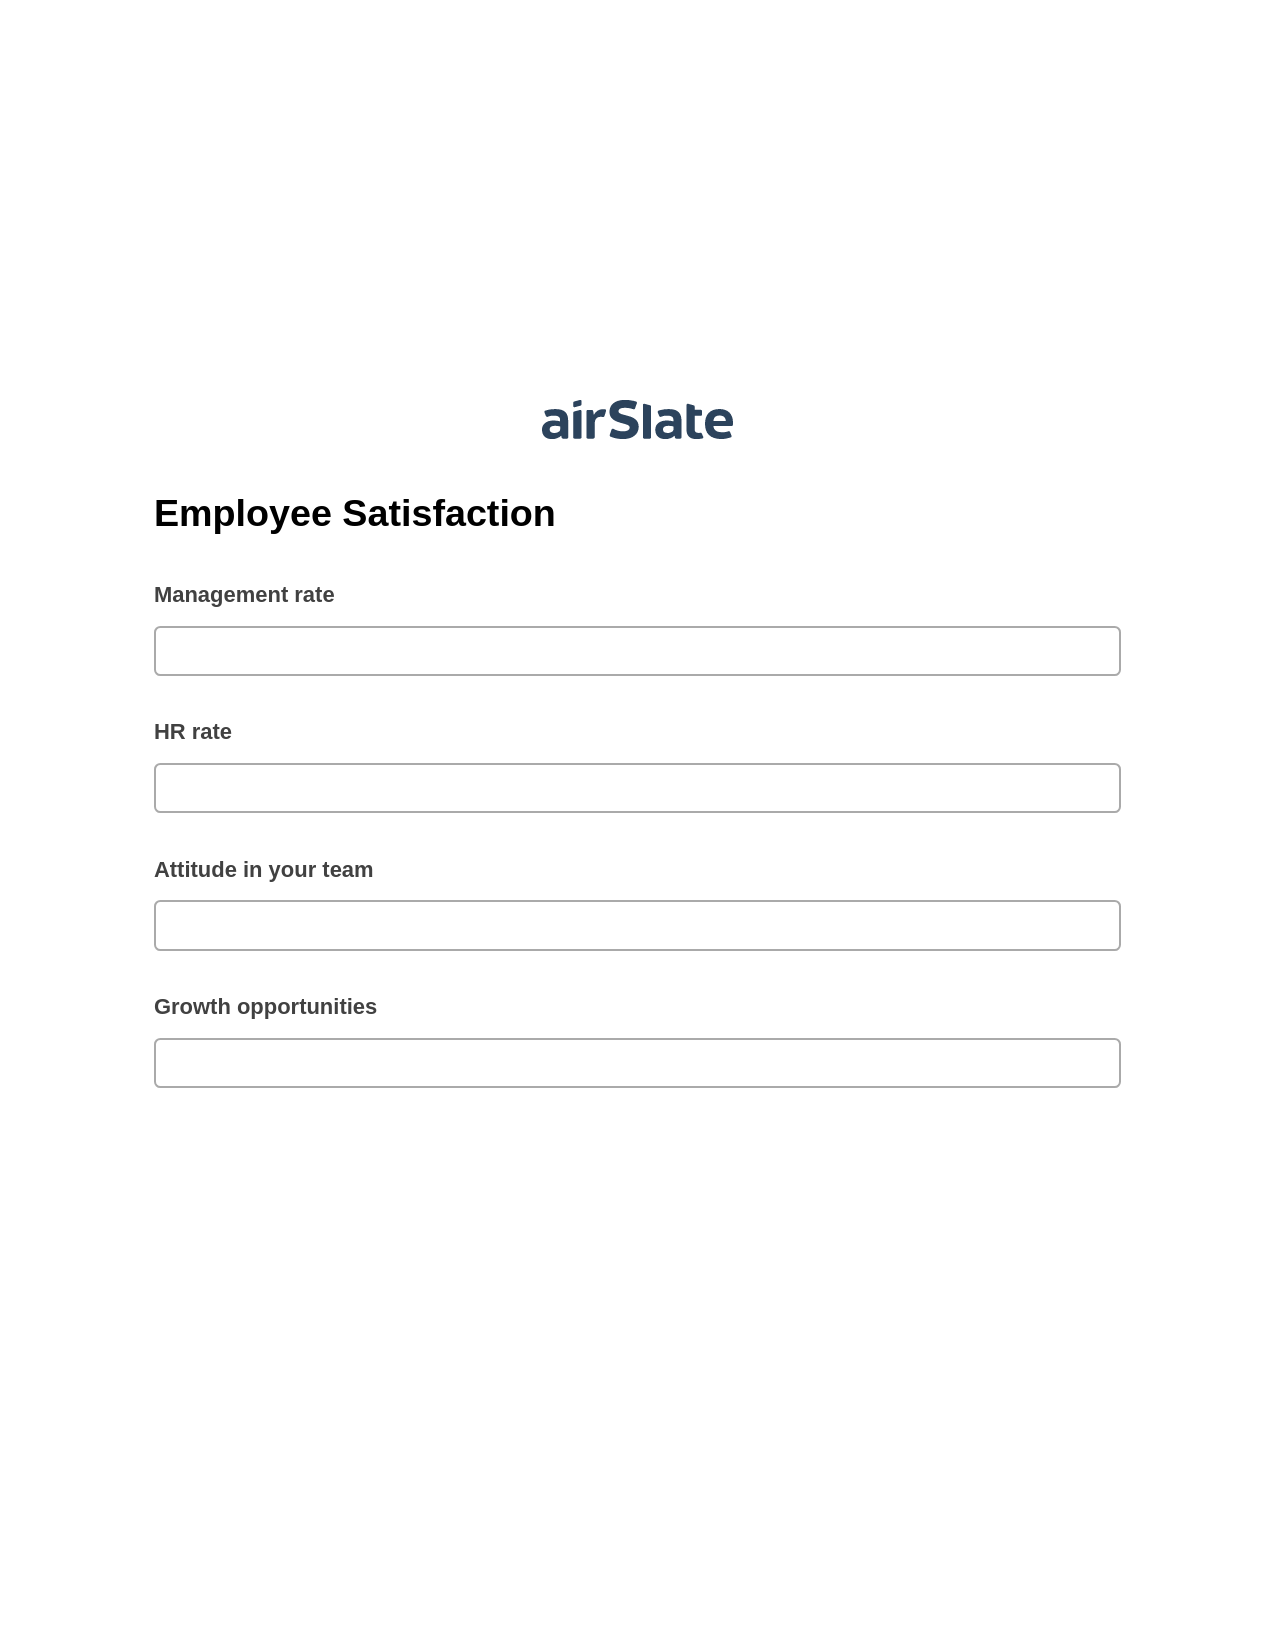 Employee Satisfaction Pre-fill from Google Sheets Bot, Invoke Salesforce Process Bot, Archive to SharePoint Folder Bot